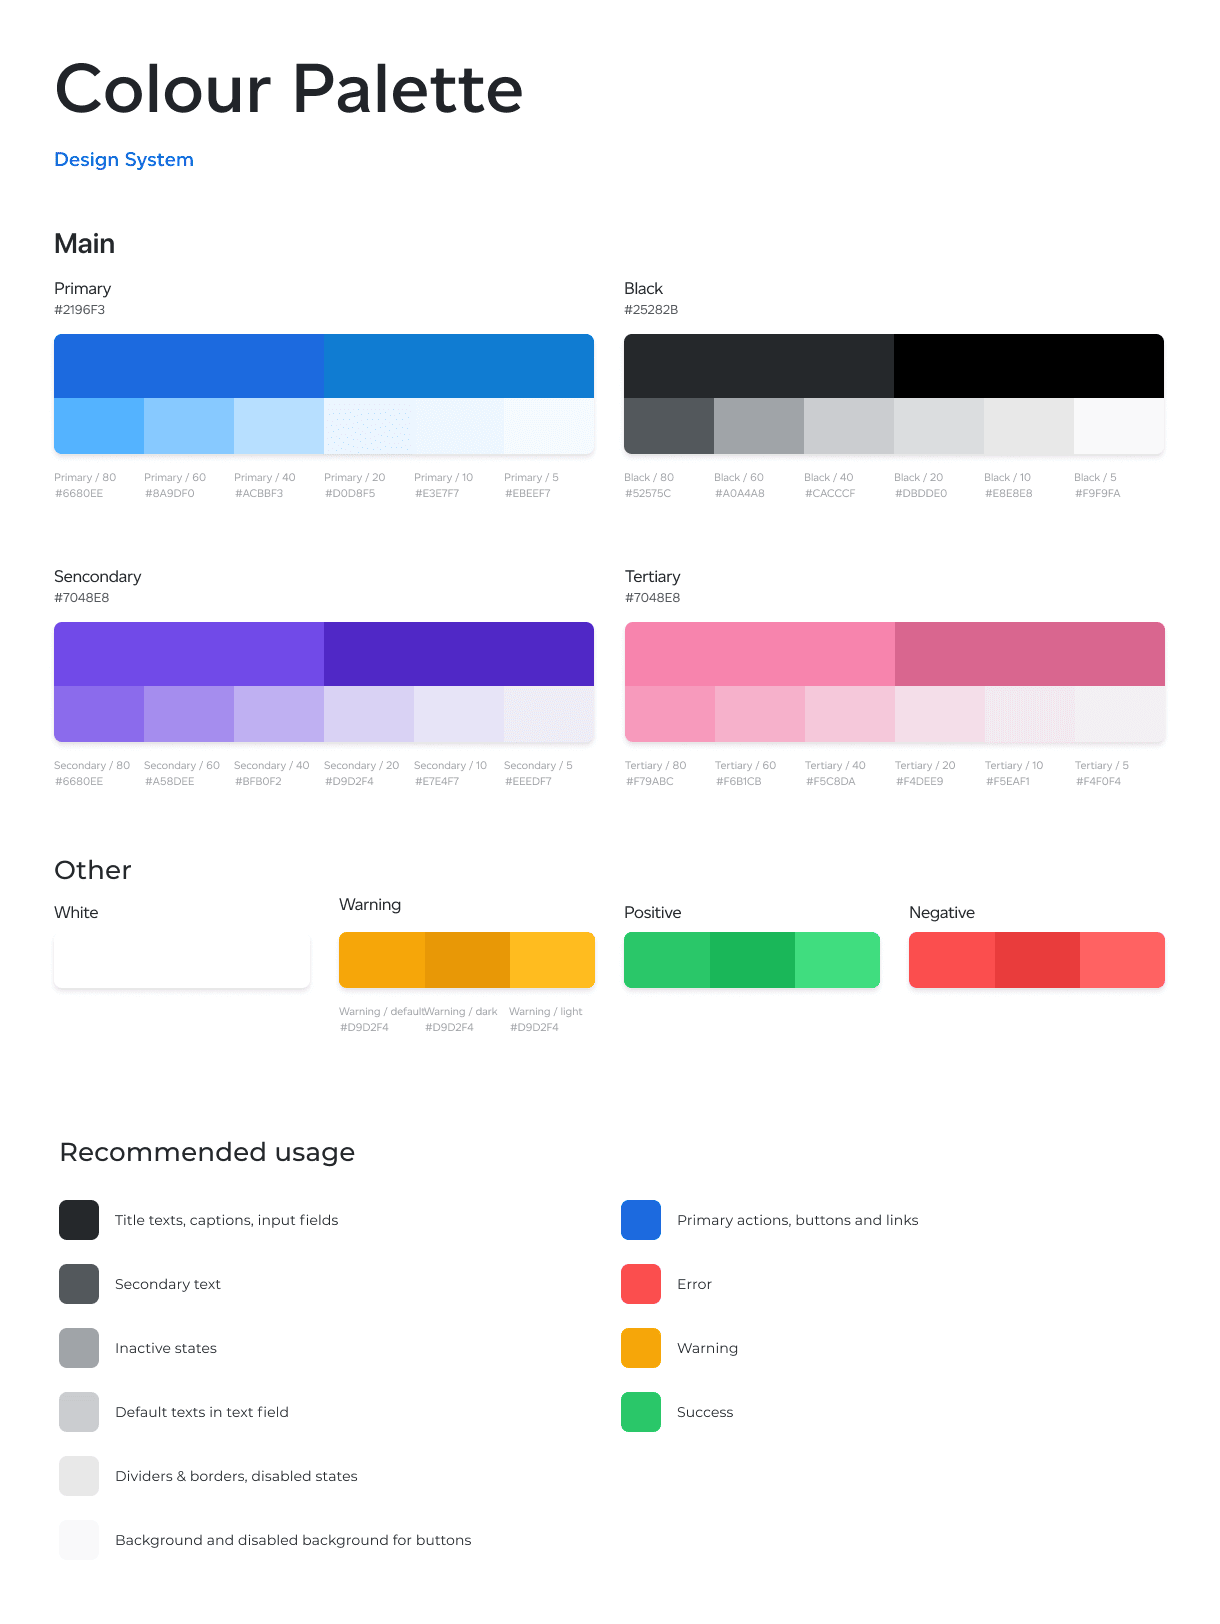 Design System - Colour